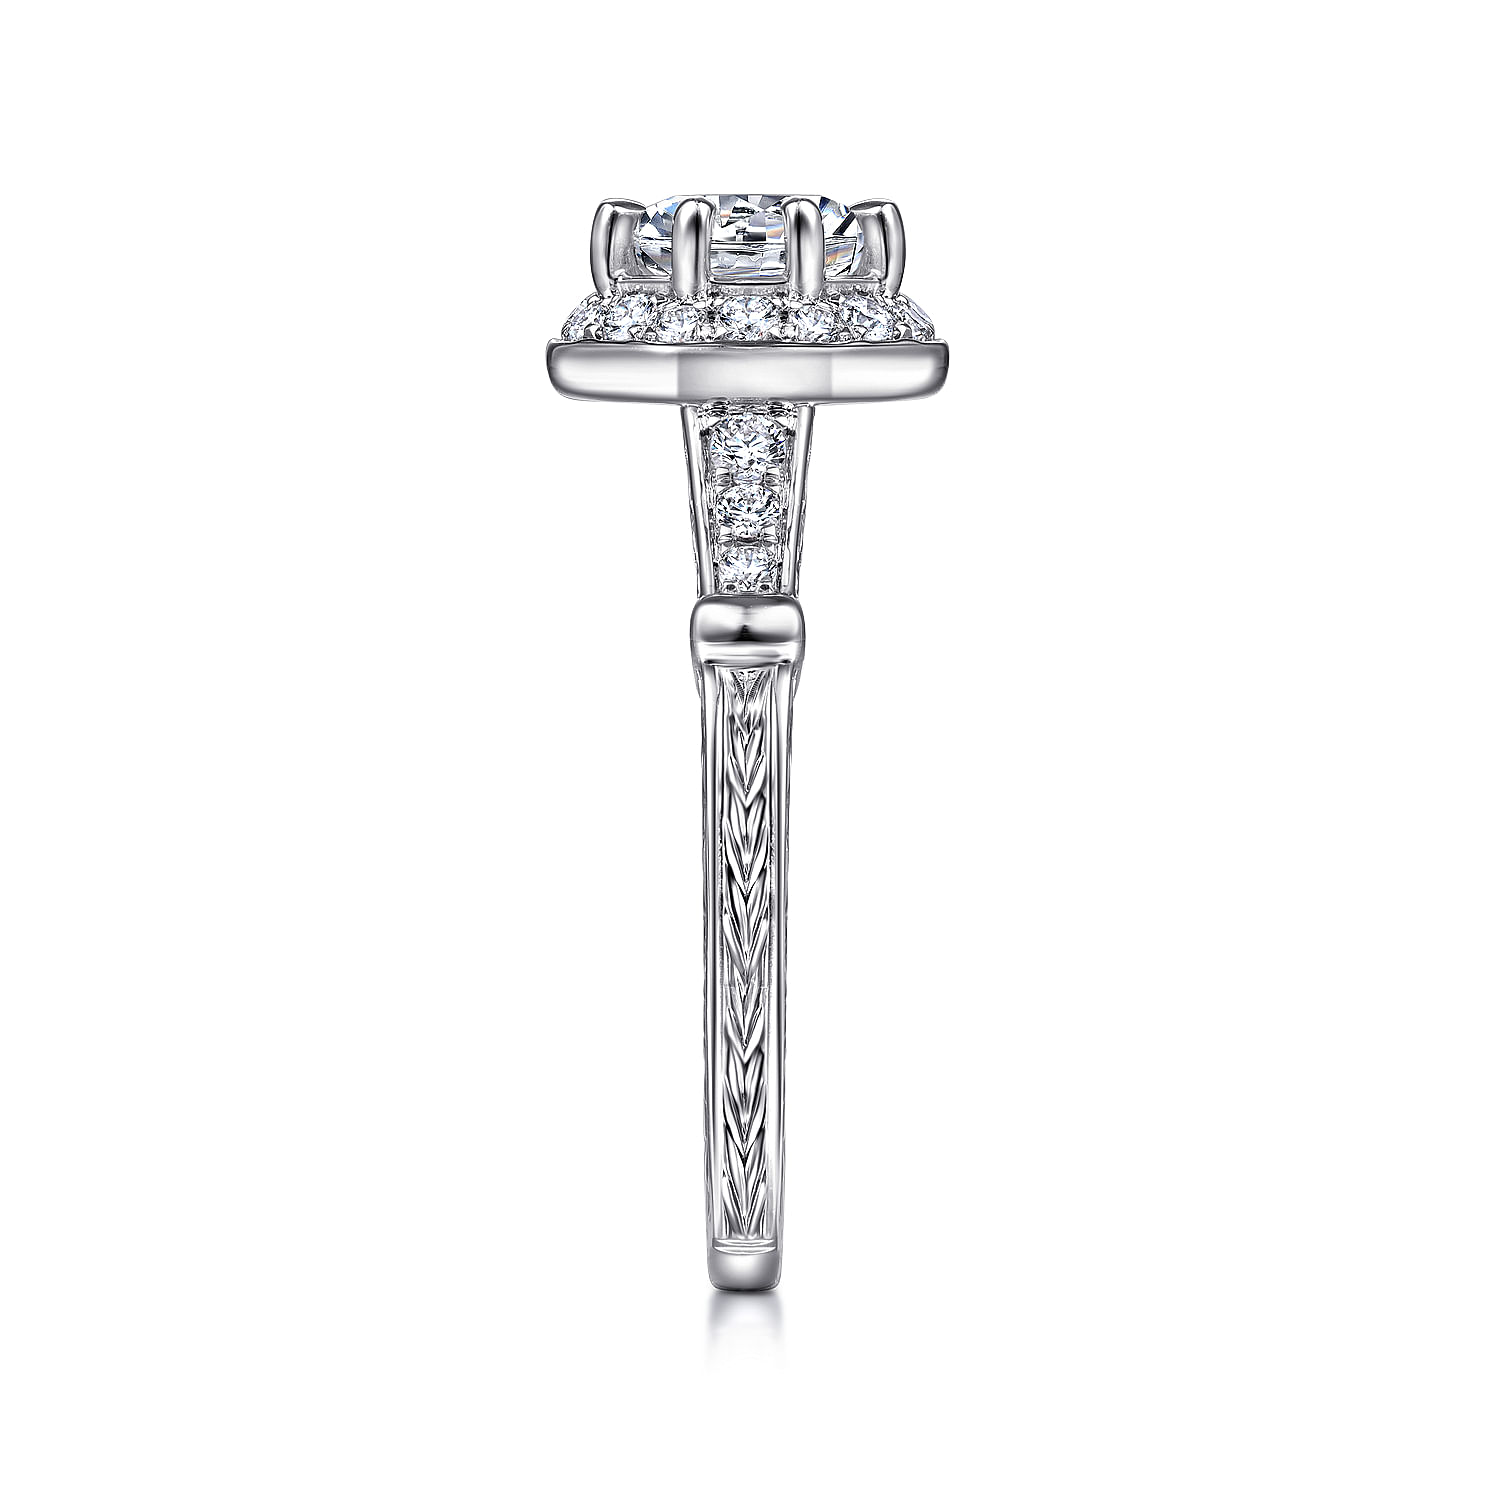 Art Deco 14K White Gold Octagonal Halo Round Diamond Engagement Ring